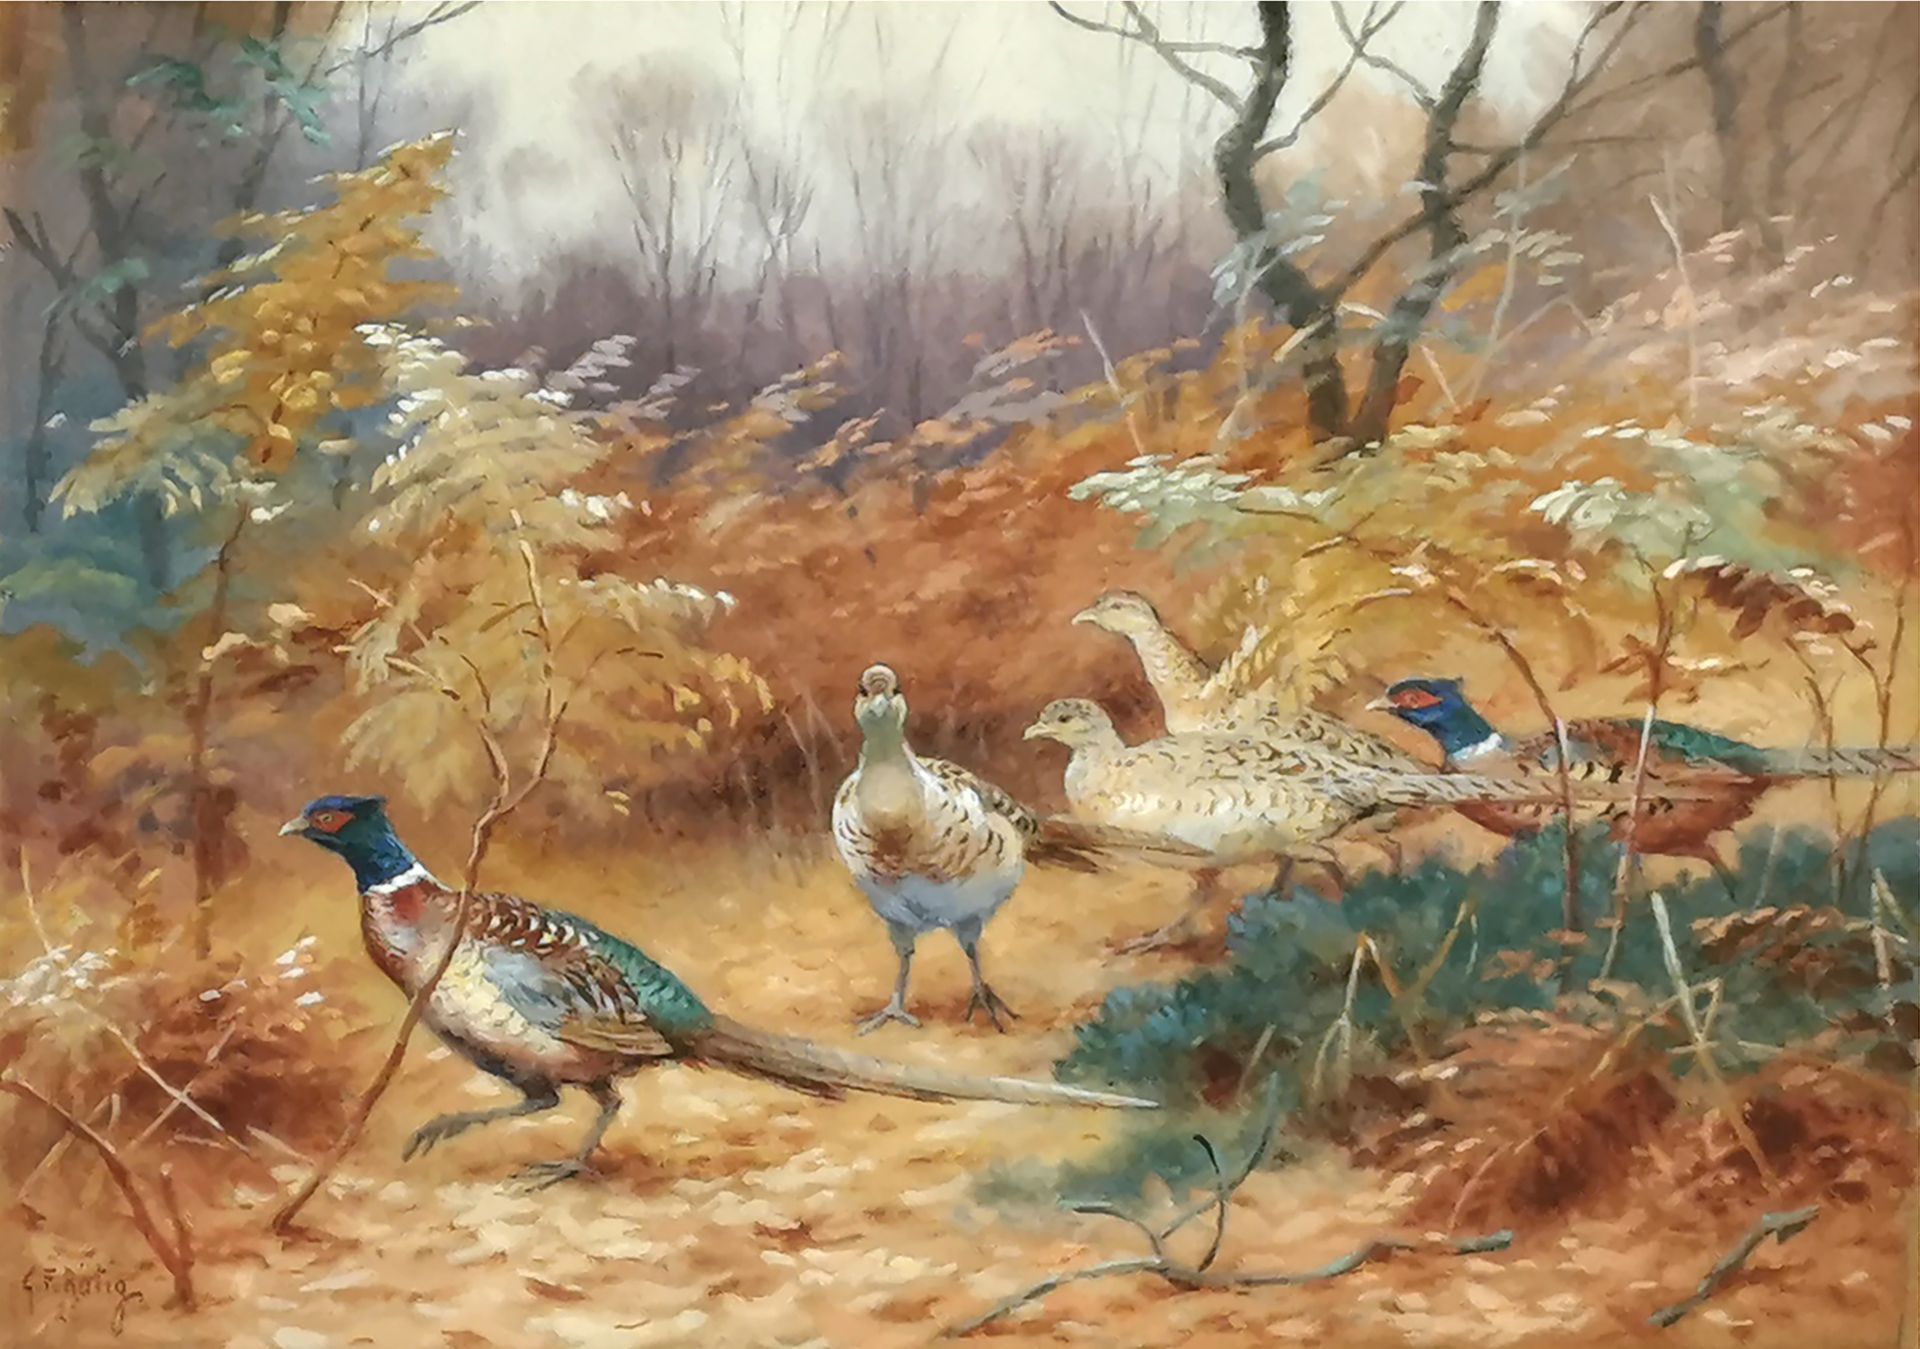 Null 乔治-弗雷德里克-罗蒂格 (1873-1961)

雉鸡，1926年

纸上水粉画，有签名和日期

21 x 28.5 cm 正在观看

有框